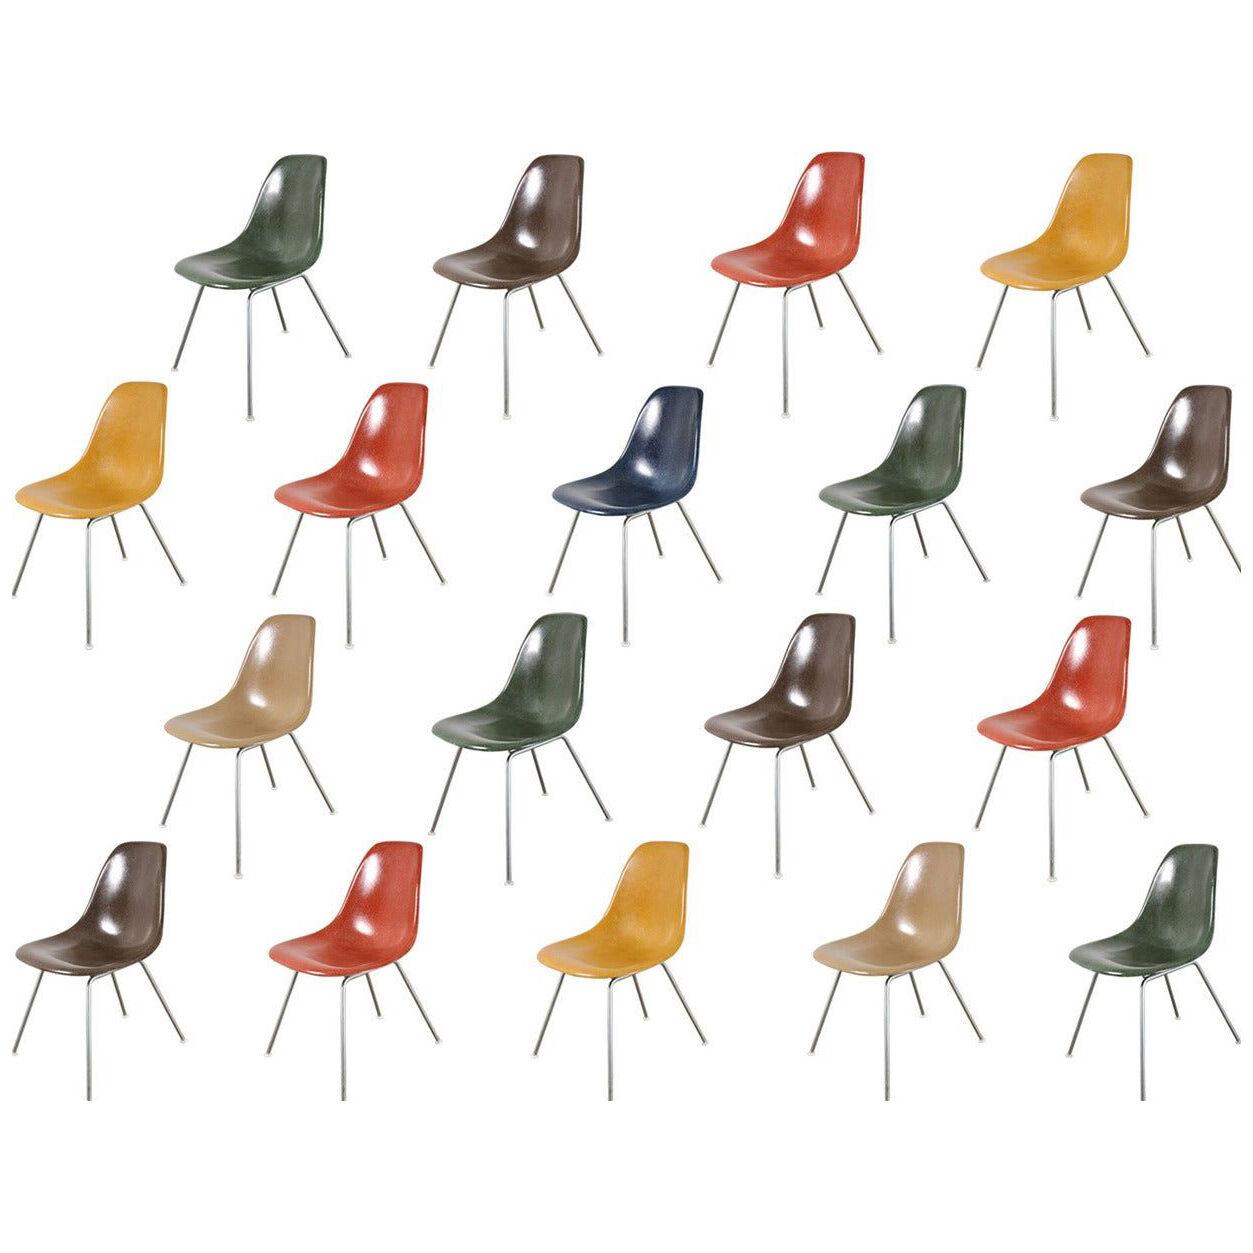 Original Eames Fiberglass Shell Chairs by Herman Miller